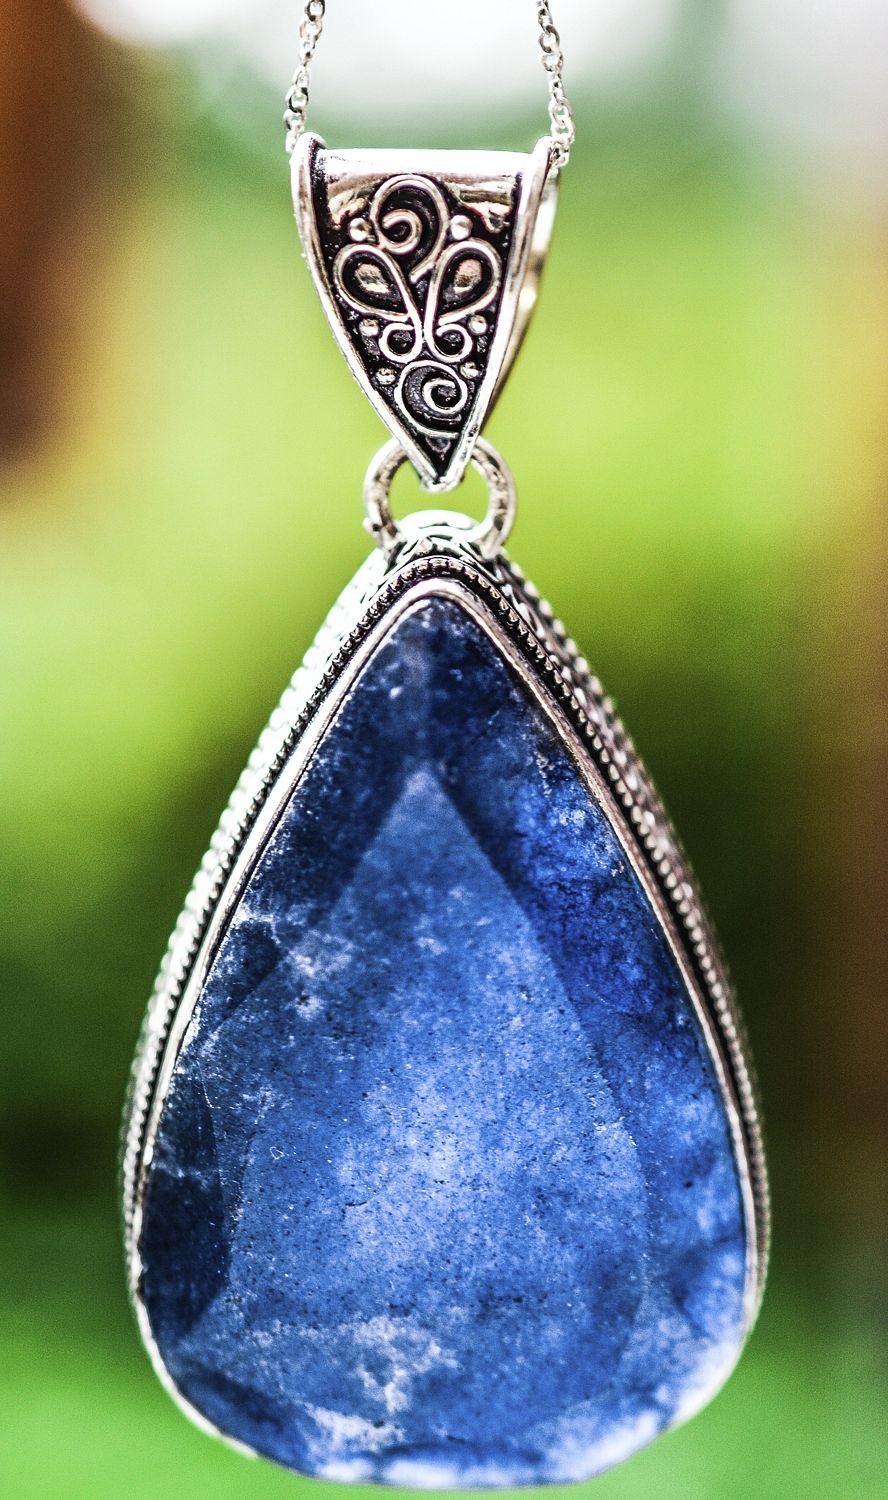 Shiny blue stone pendant jewelry